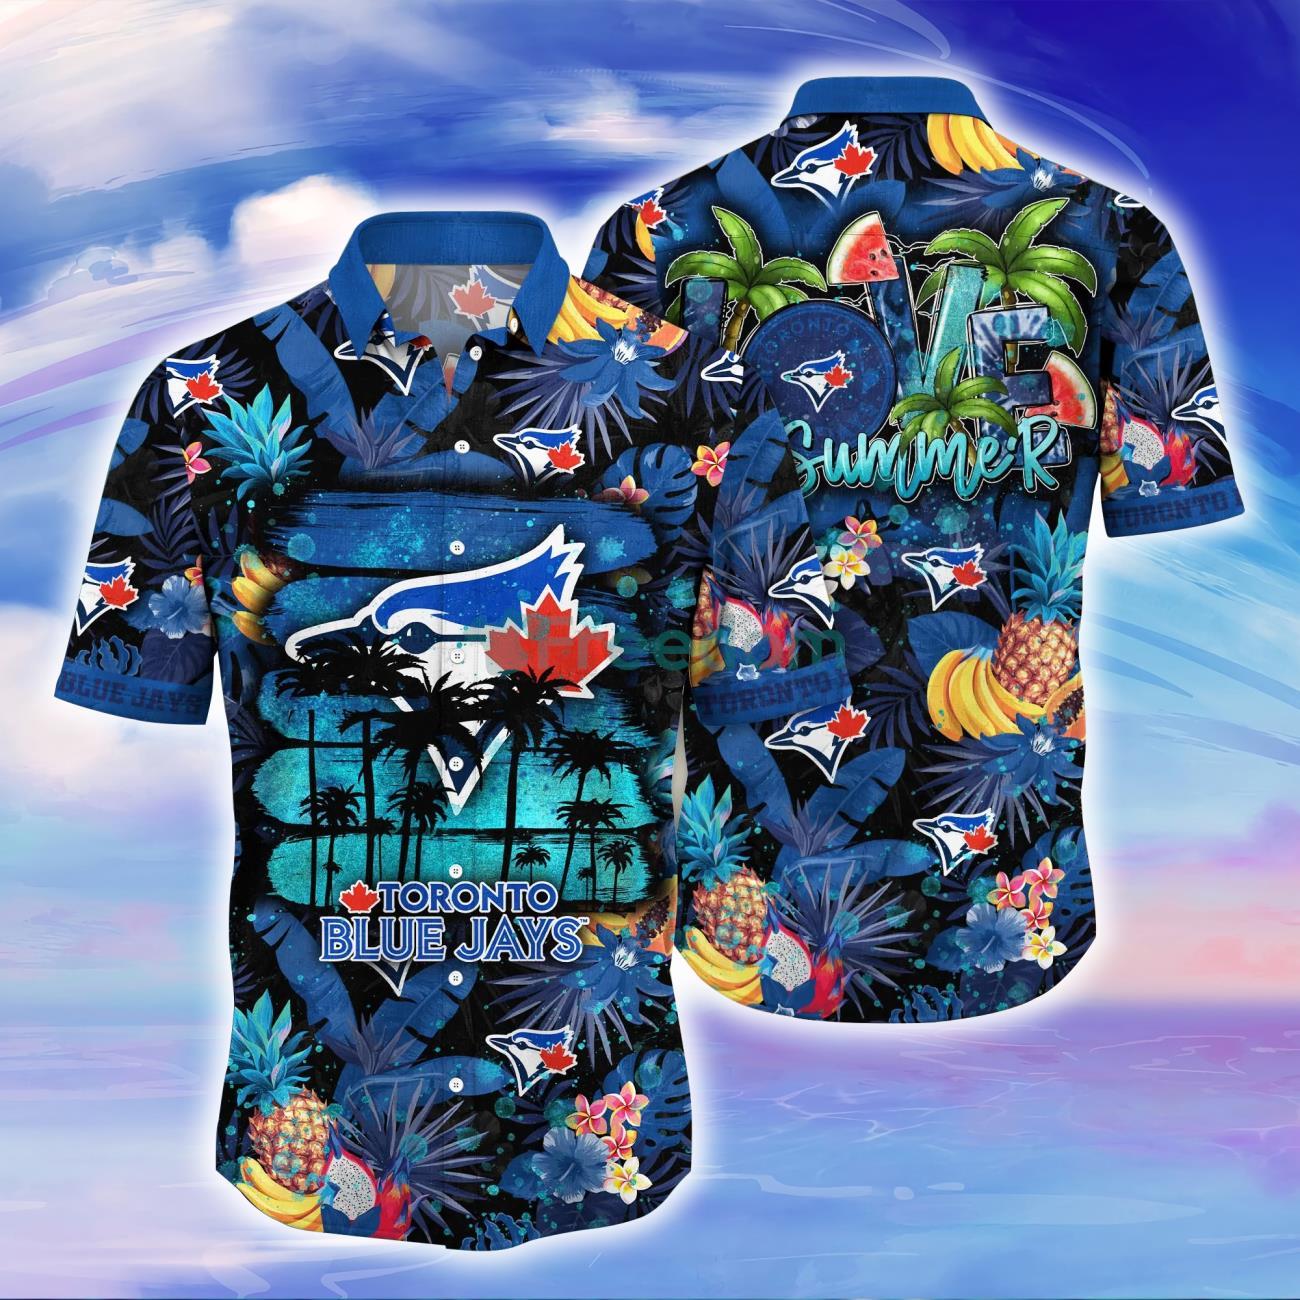 Toronto Blue Jays Logo Hawaiian Shirt, Stress Blessed Obsessed